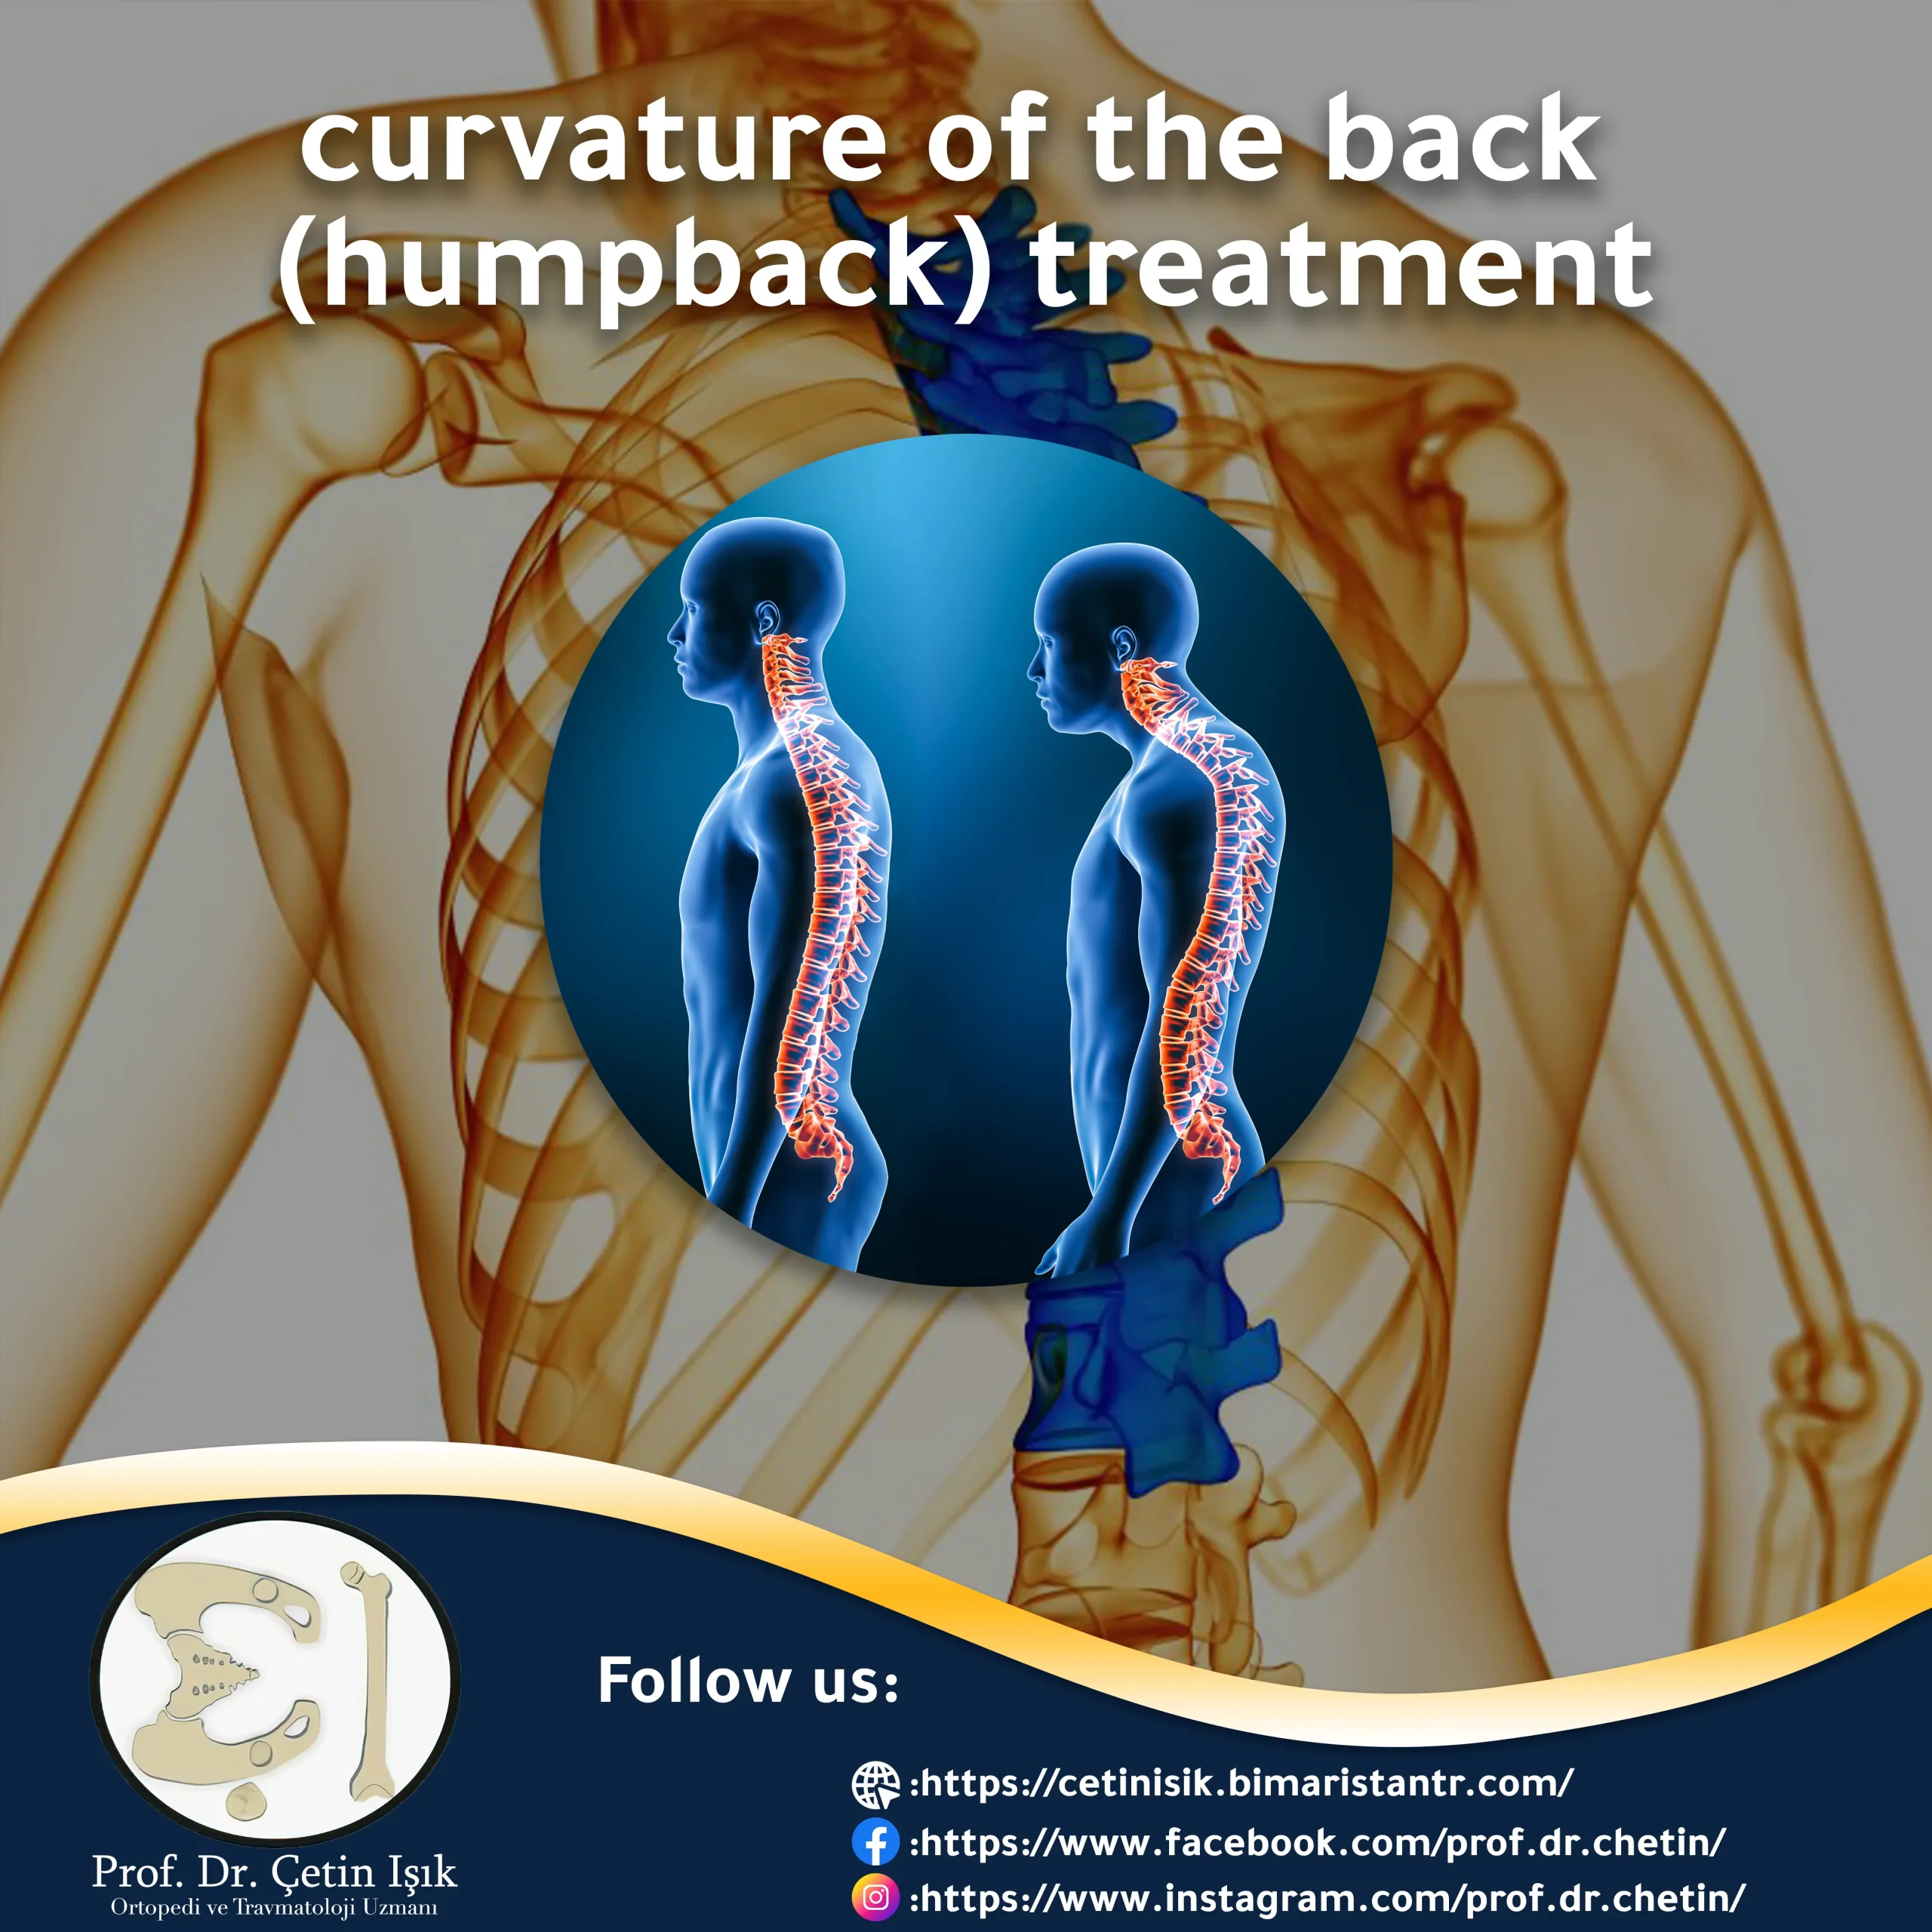 Curvature (kyphosis) treatment